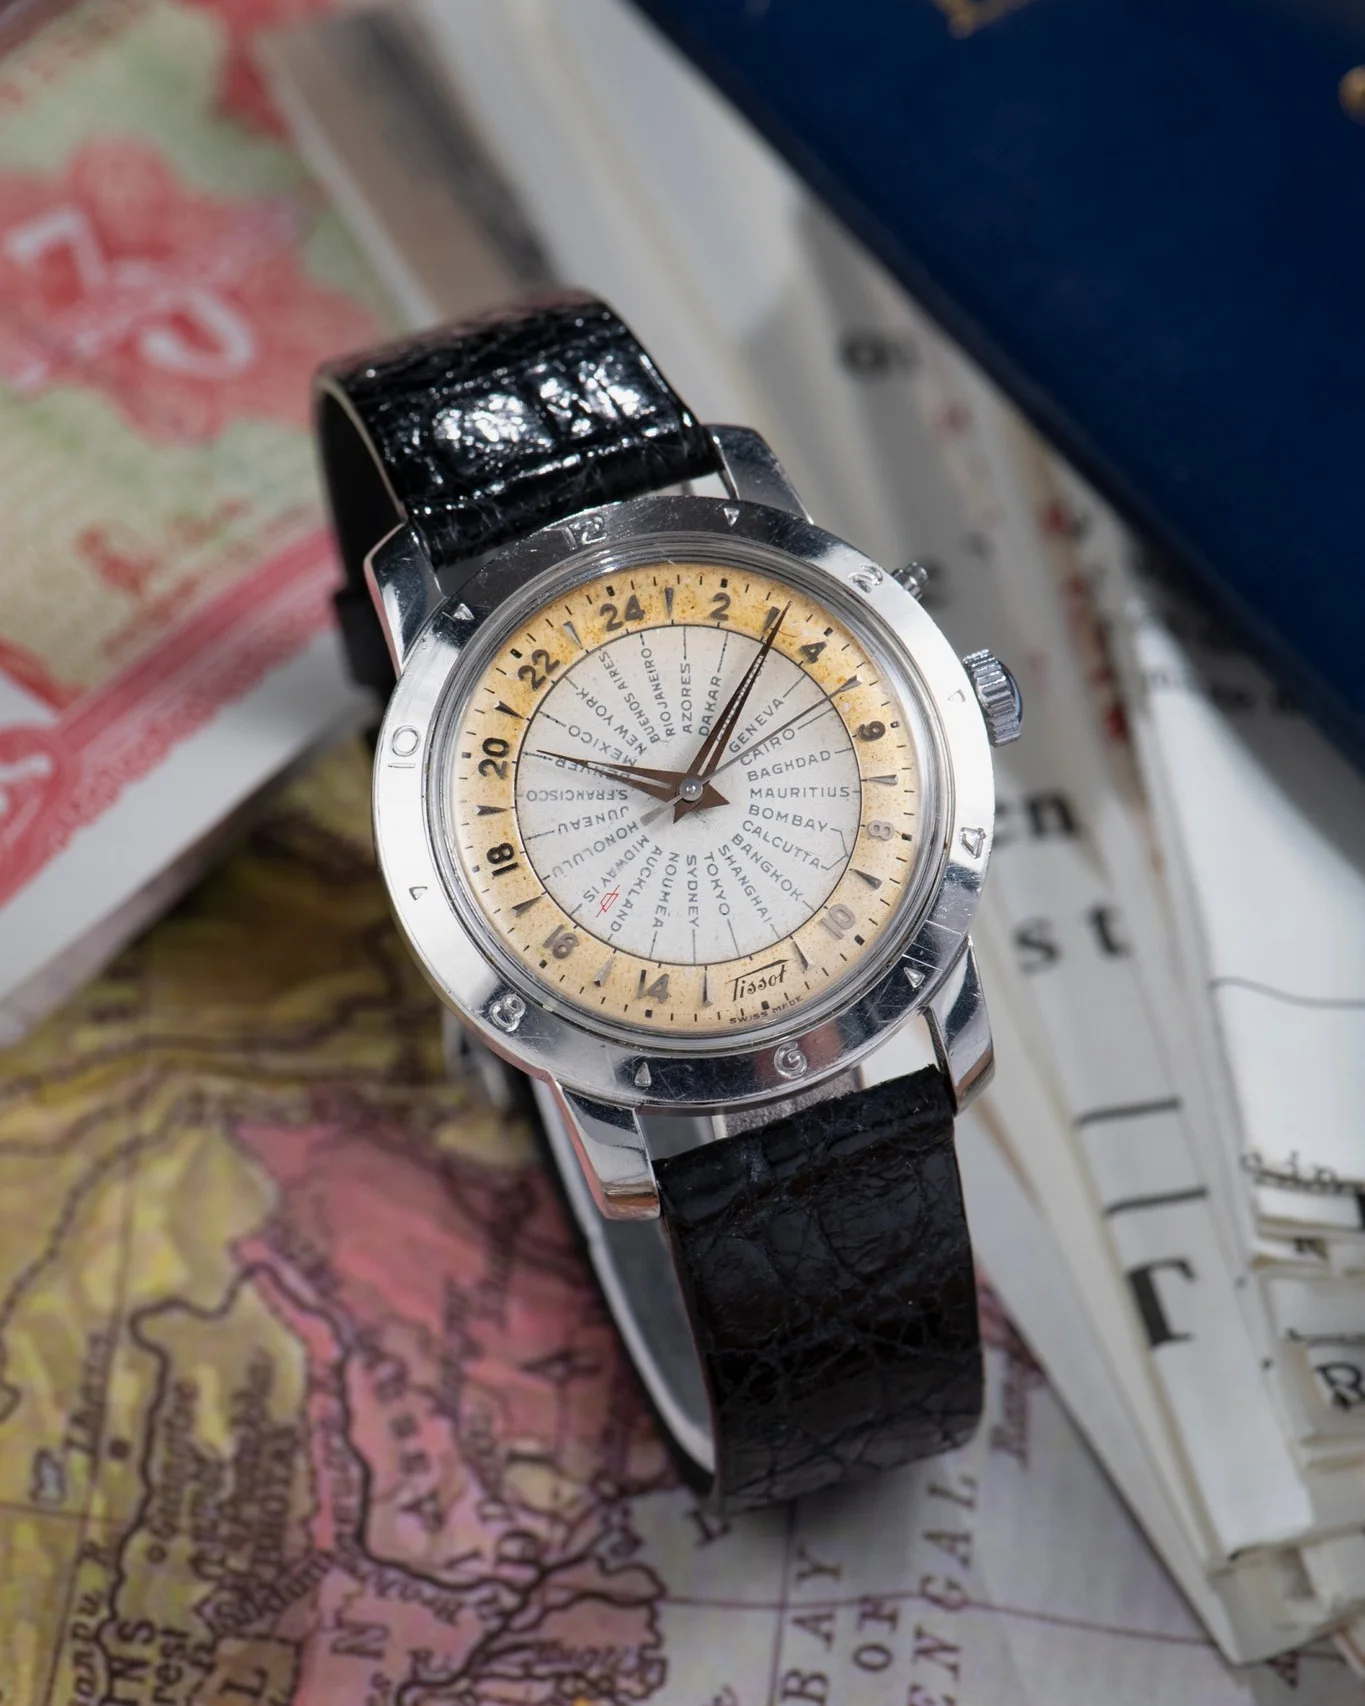 huber_vintage_timepieces